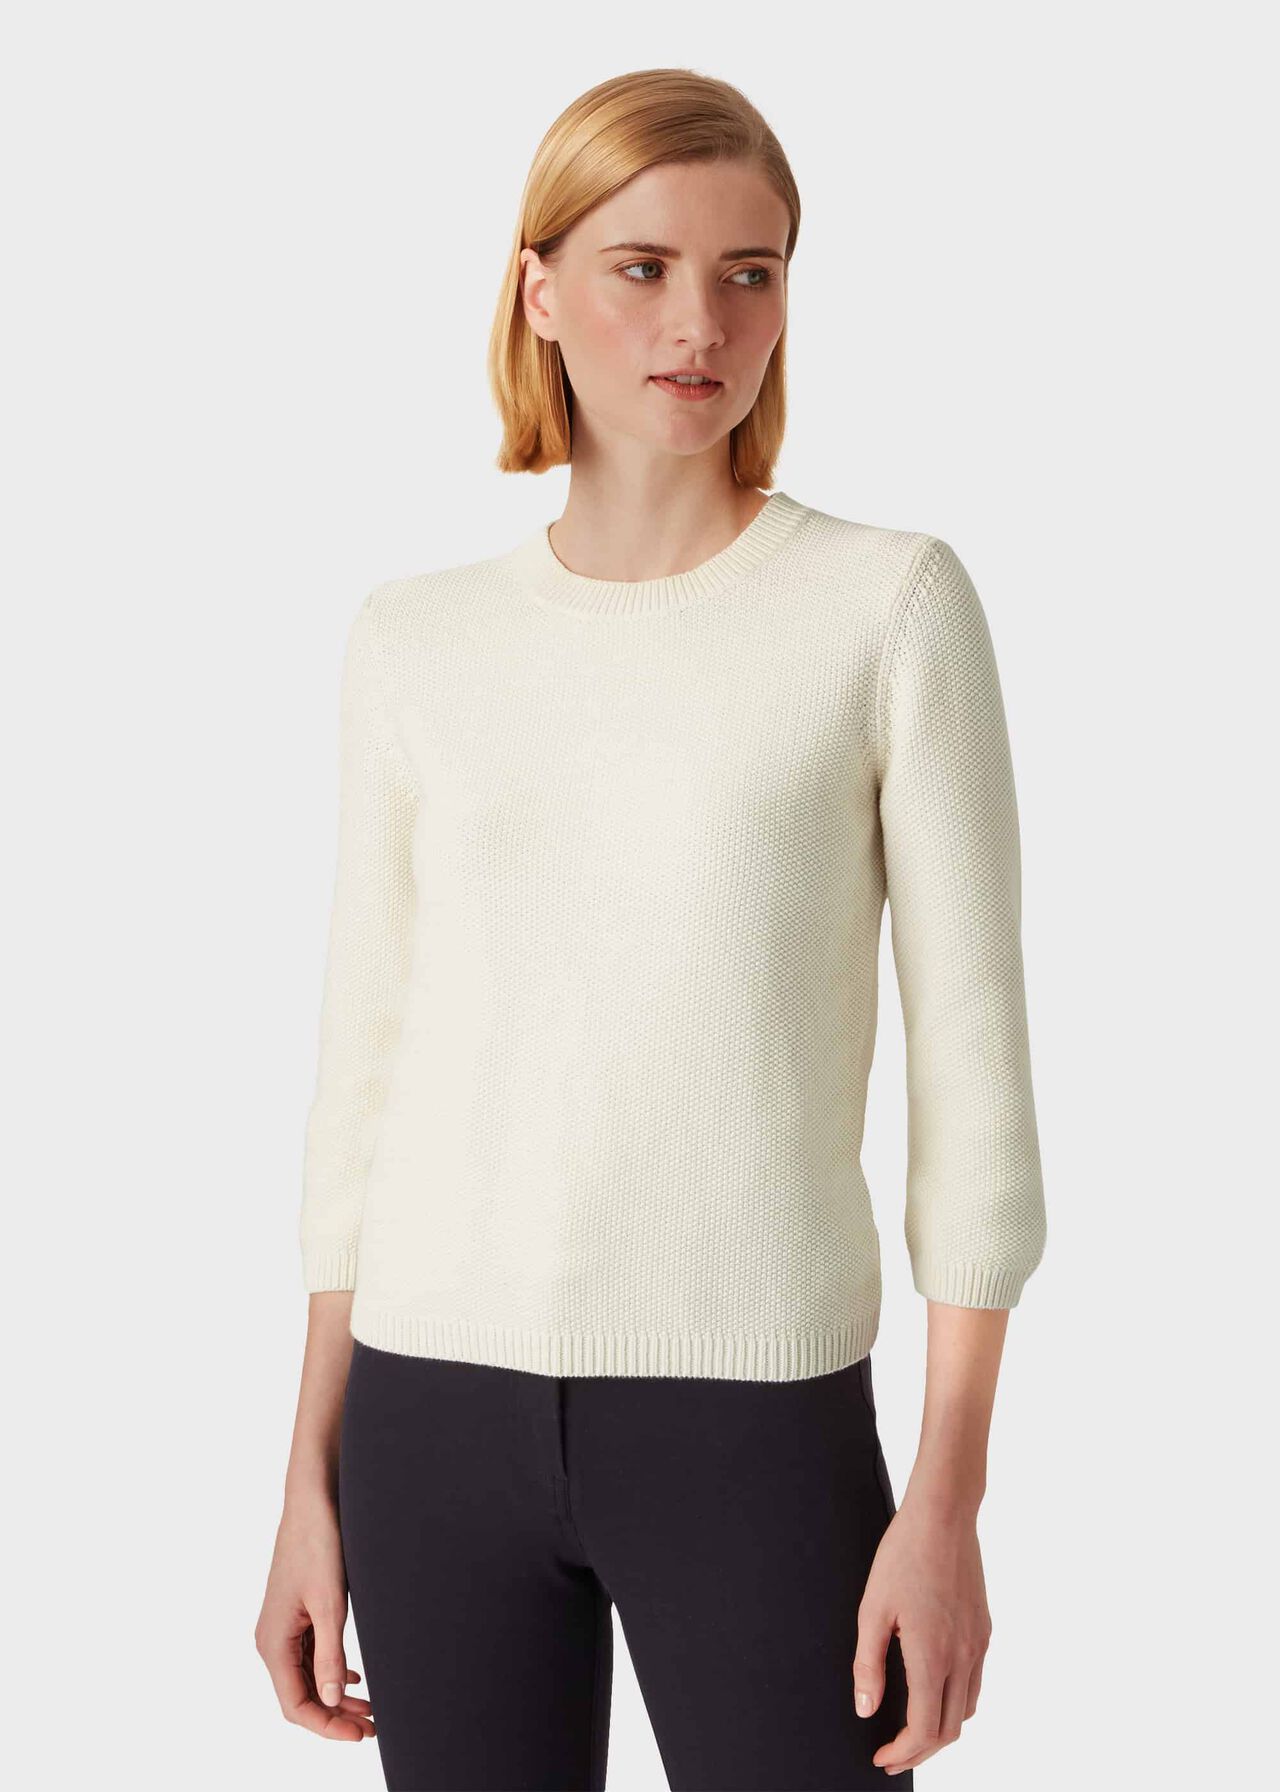 Jade Sweater | Hobbs